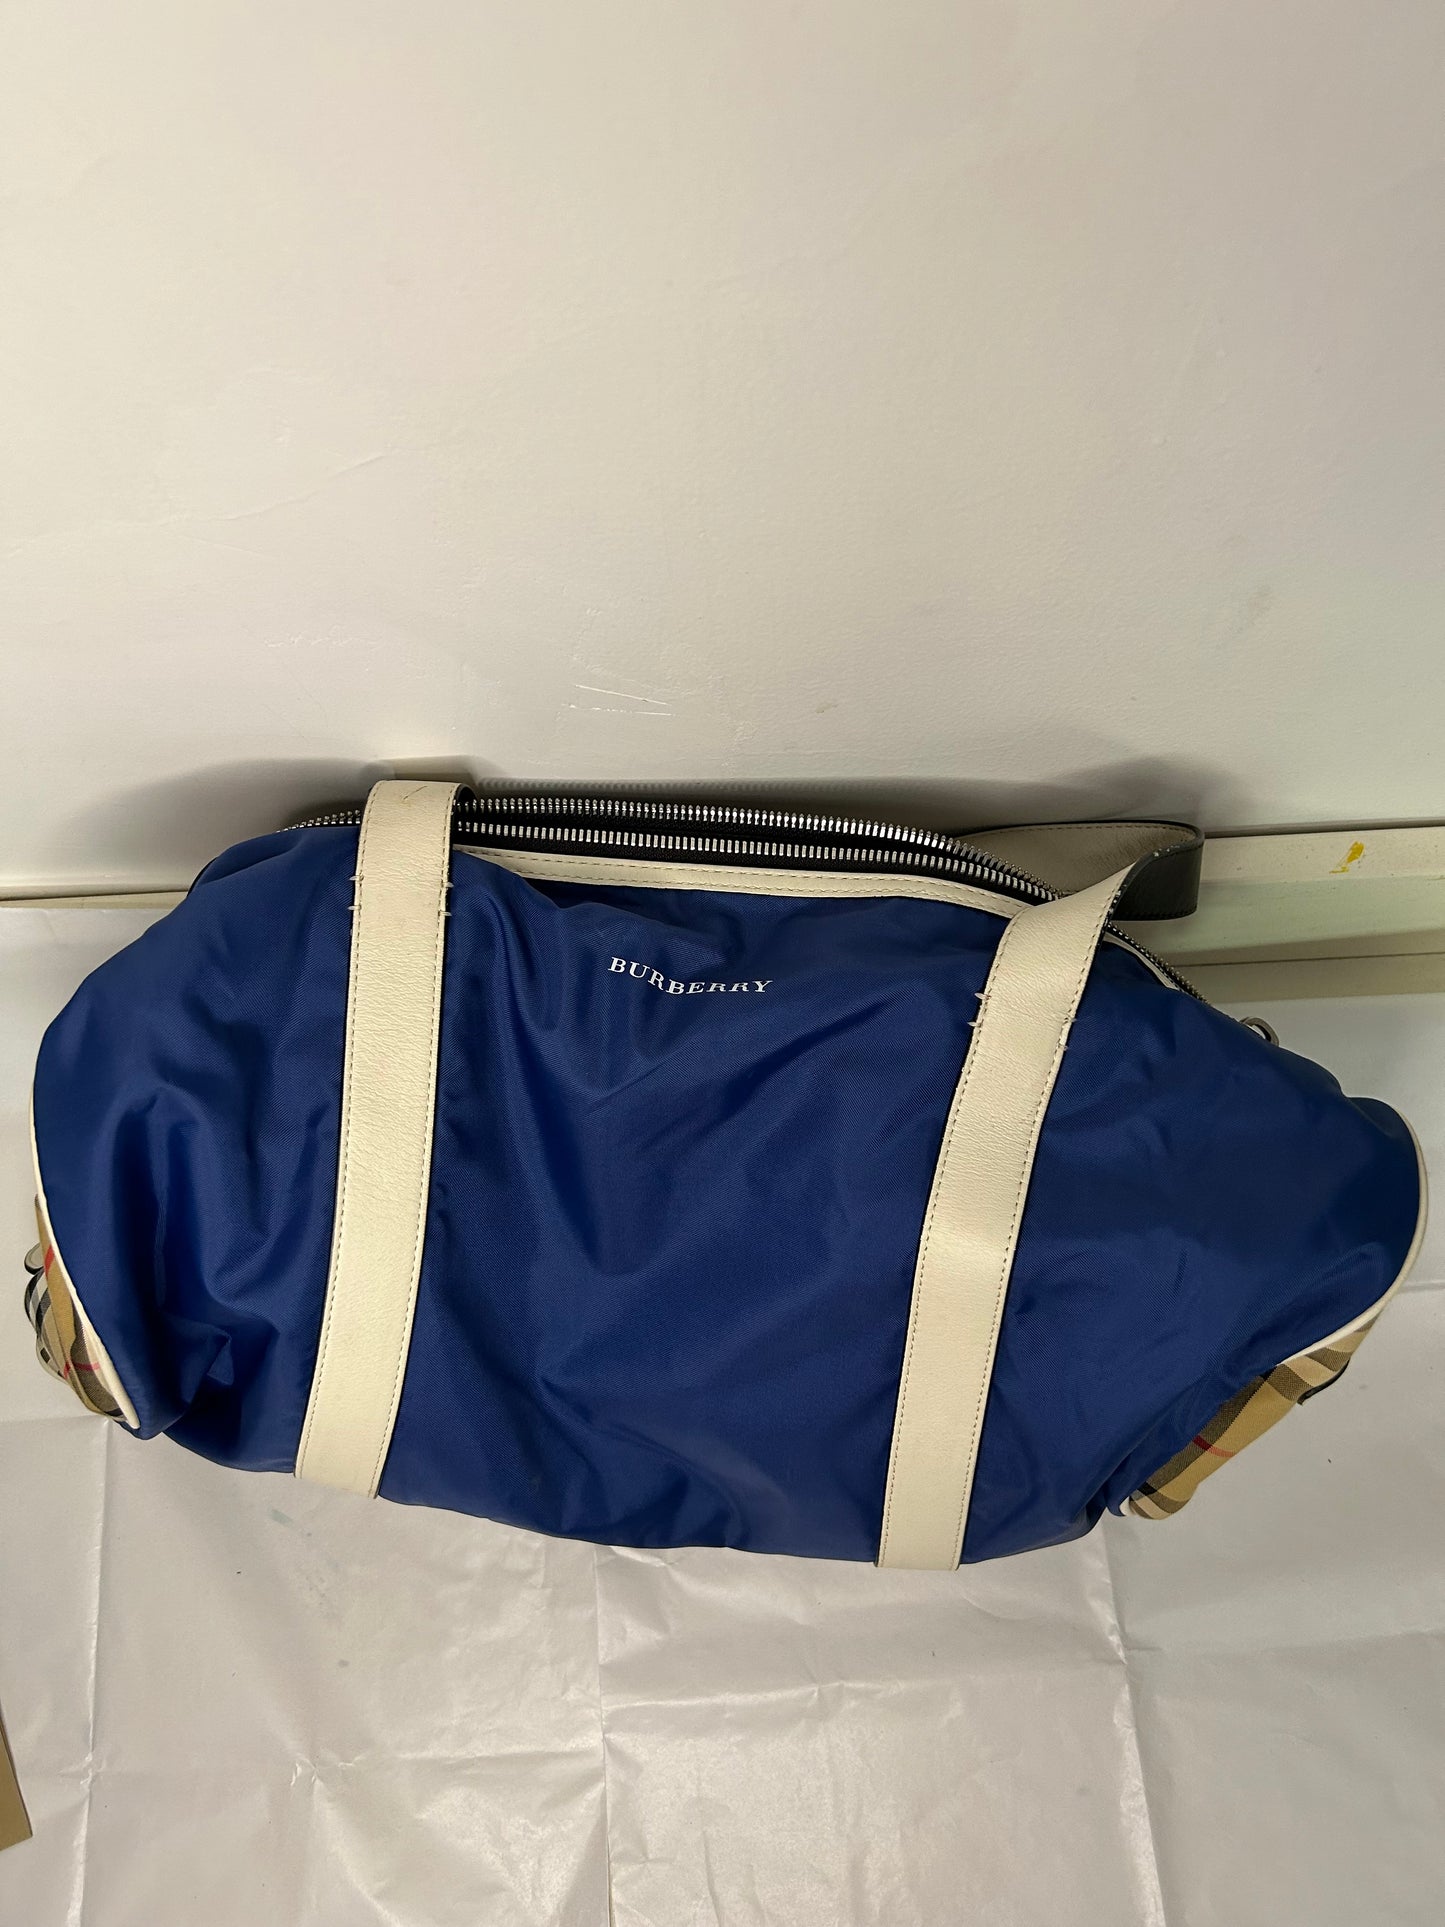 Burberry White/Blue Hand Duffle Bag